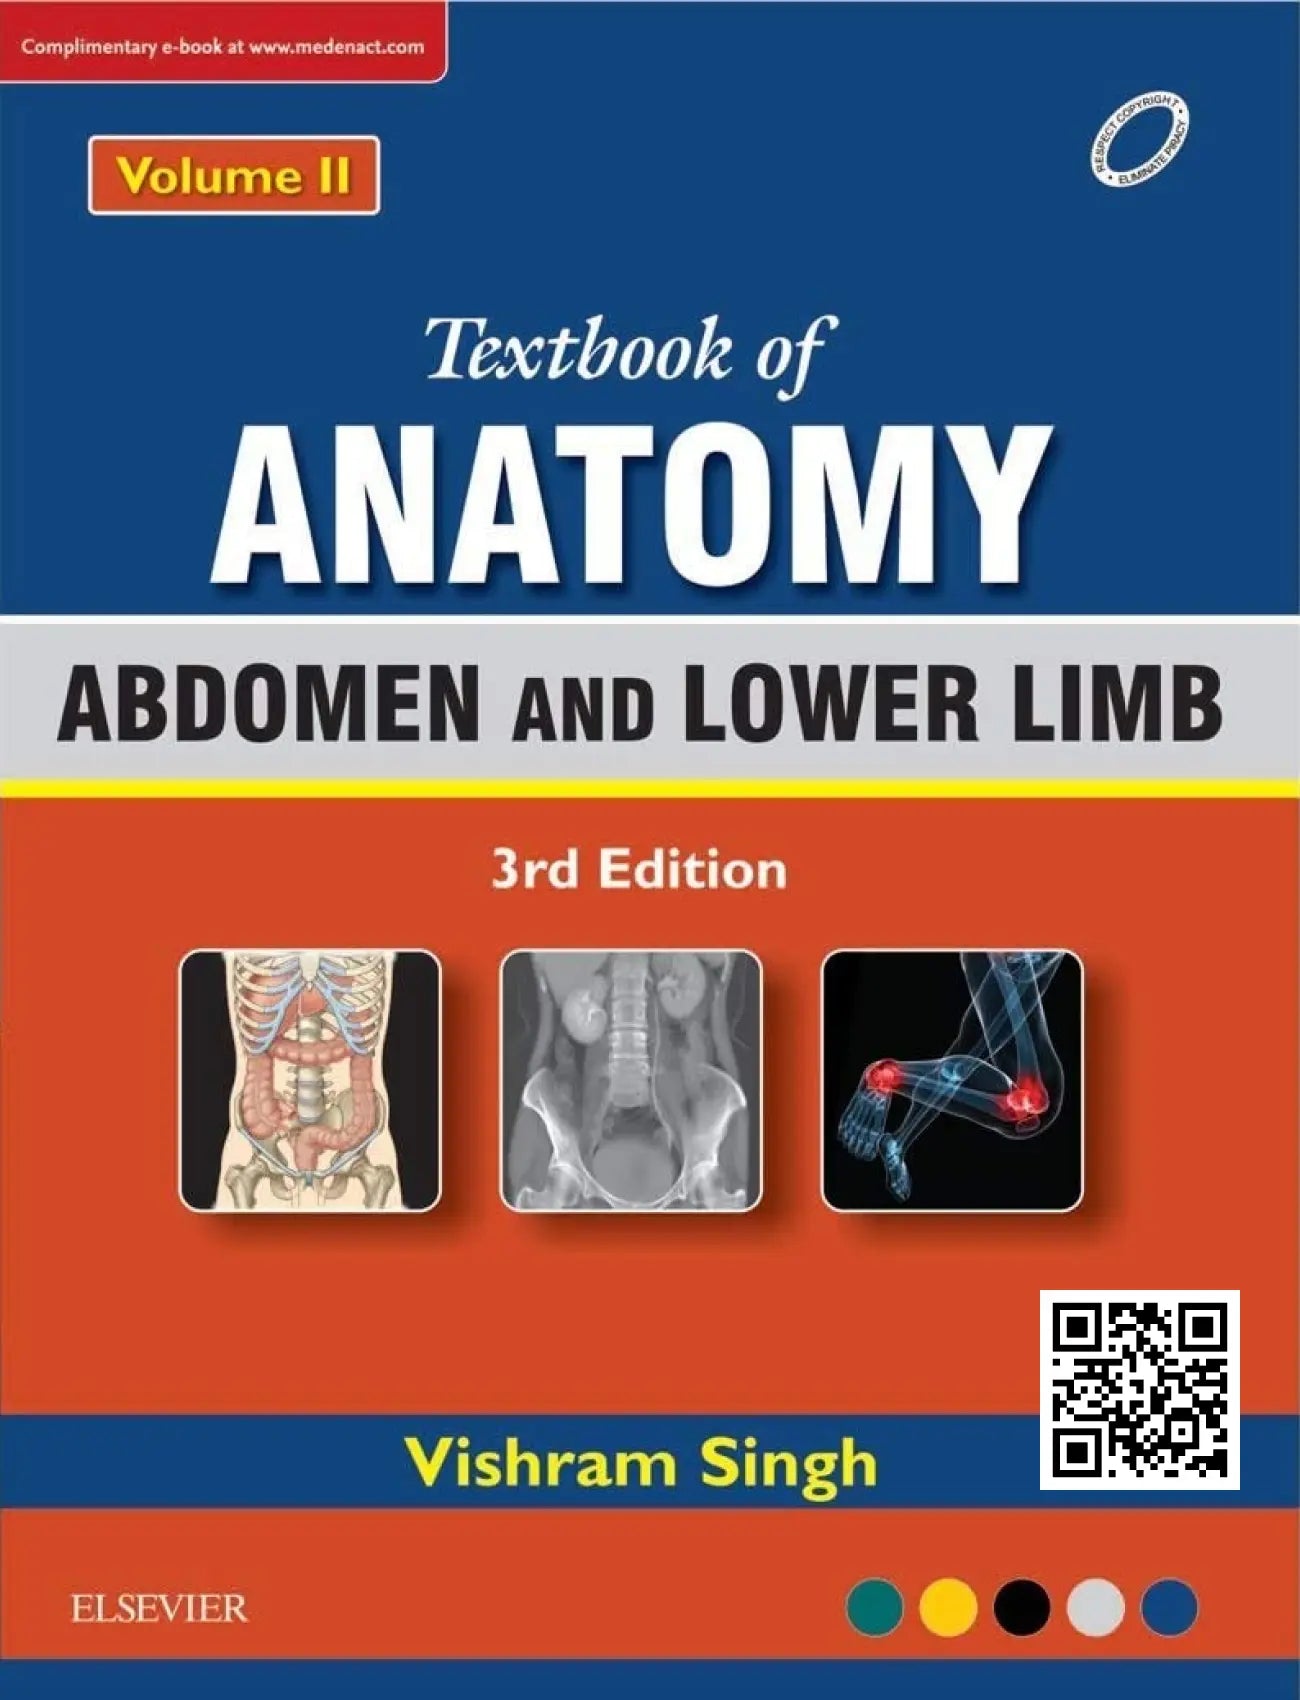 Textbook of Anatomy Upper (Set Of 3 Volumes) With General Anatomy 3 ED [ Upper Limb , Thorax , Abdomen , Lower Limb, Head, Neck And Brain ]